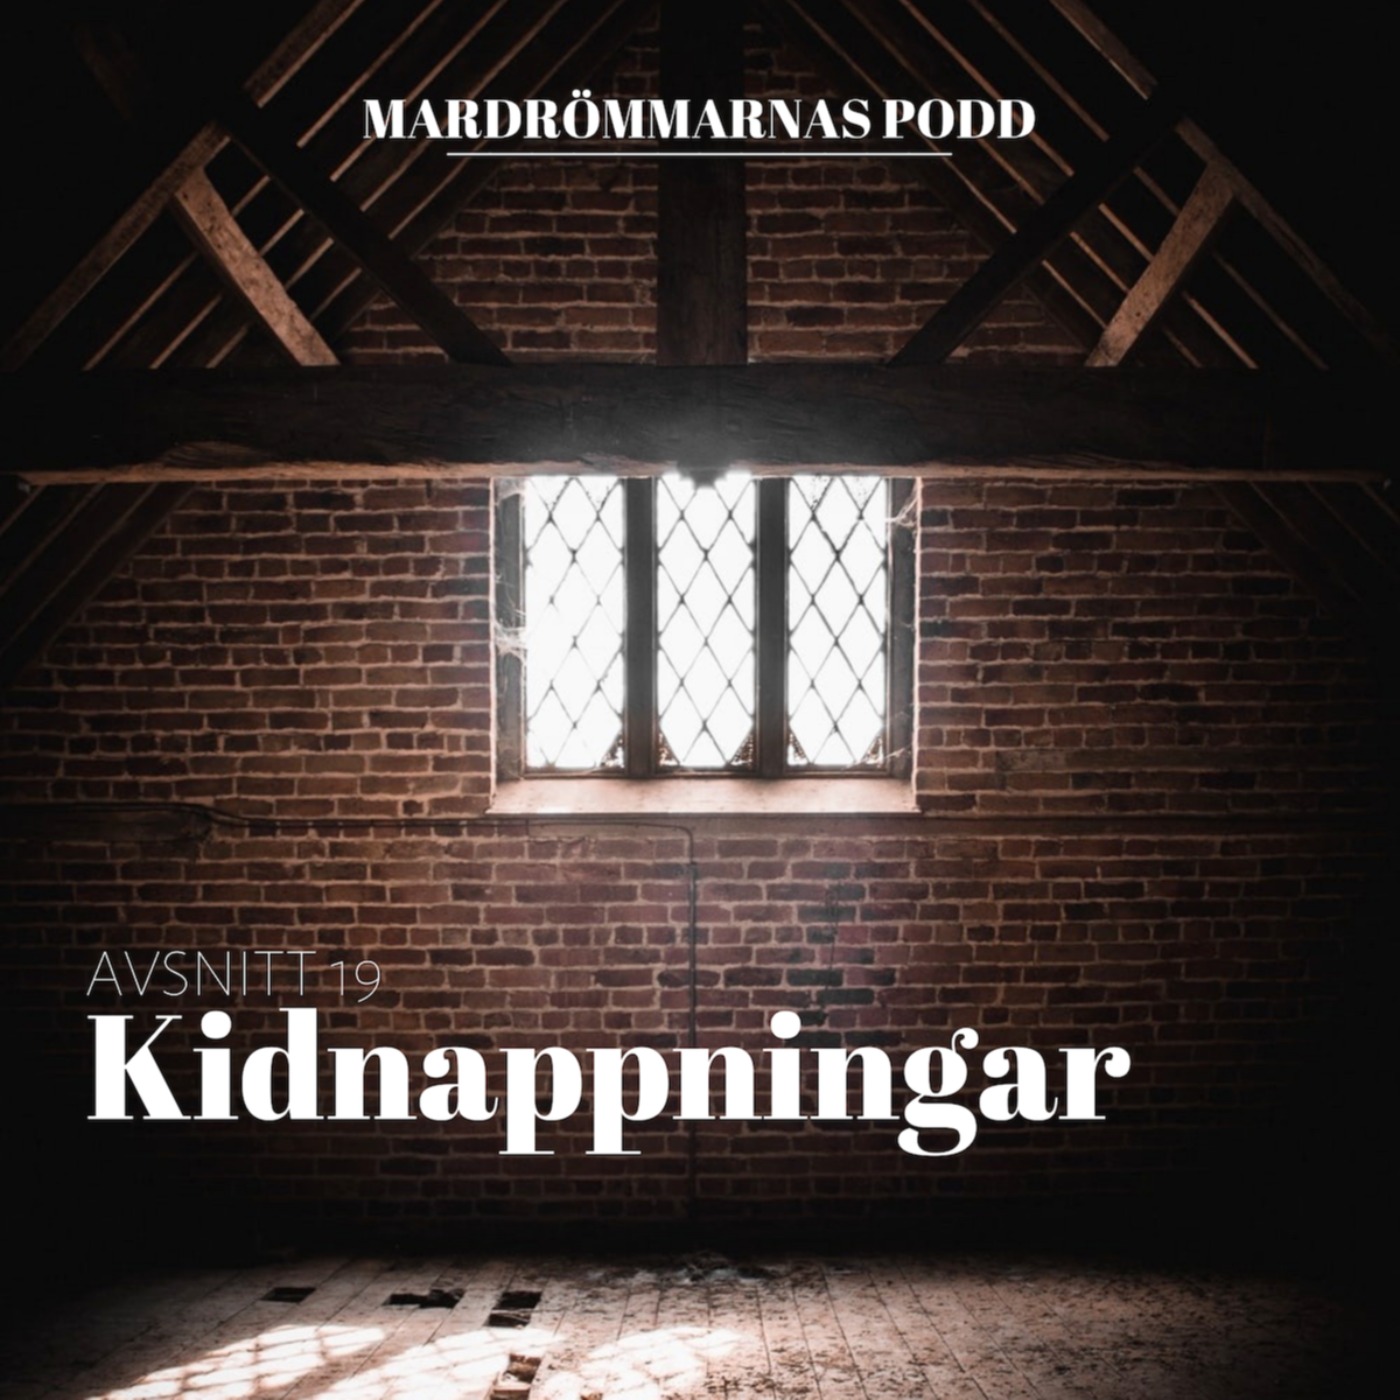 cover art for Kidnappningar